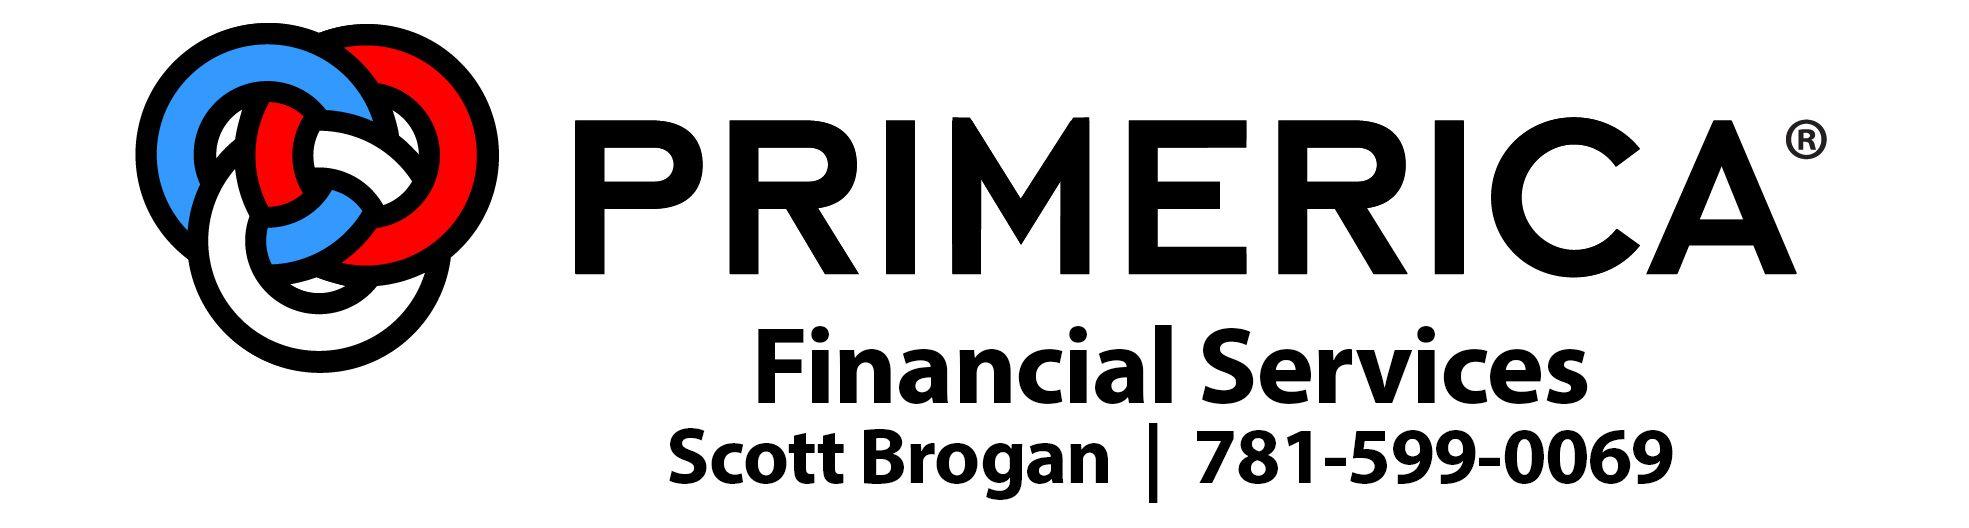 Prime America Logo - Primerica logo Area Chamber